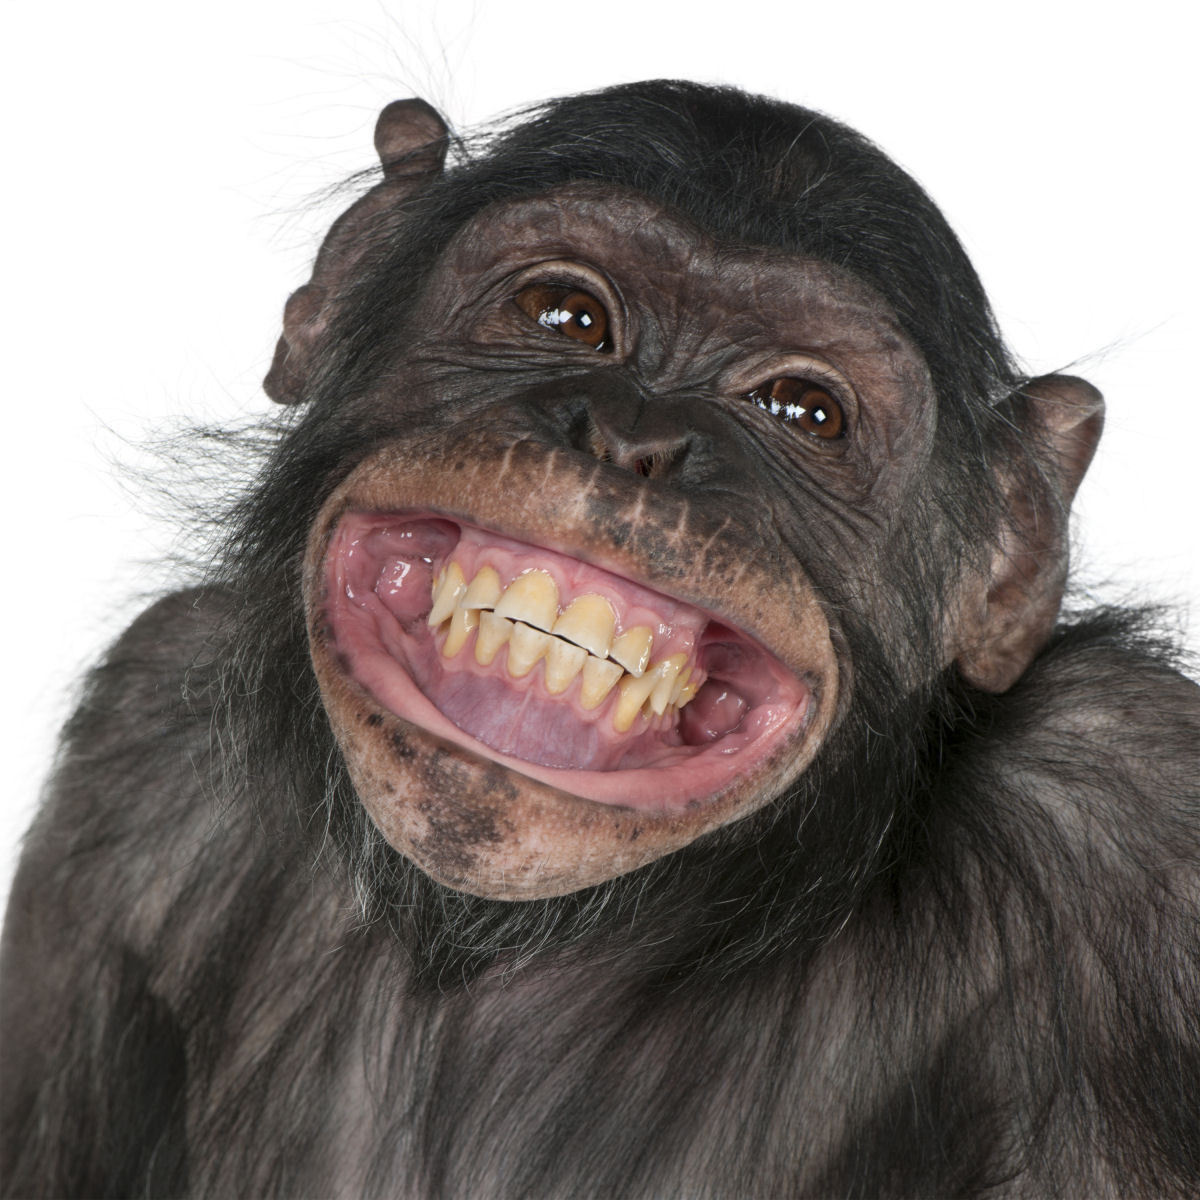 O bonobo  o primata mais 'diboas' que existe 